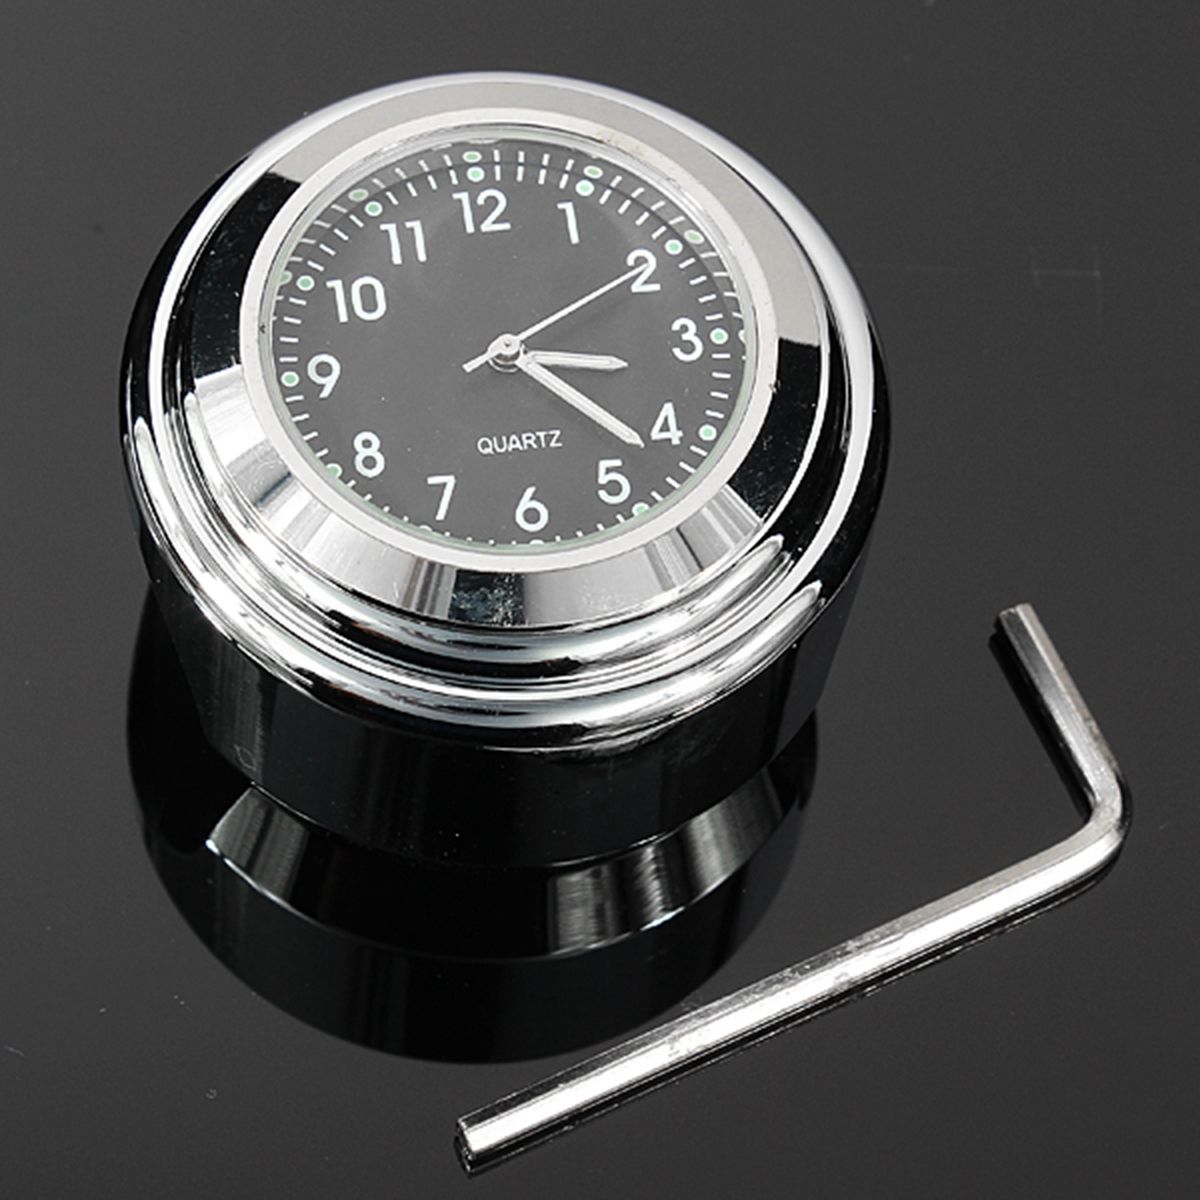 Autouhr, Mini-Fahrzeug-Armaturenbrettuhr (Auto-Digitaluhr-Thermometer)